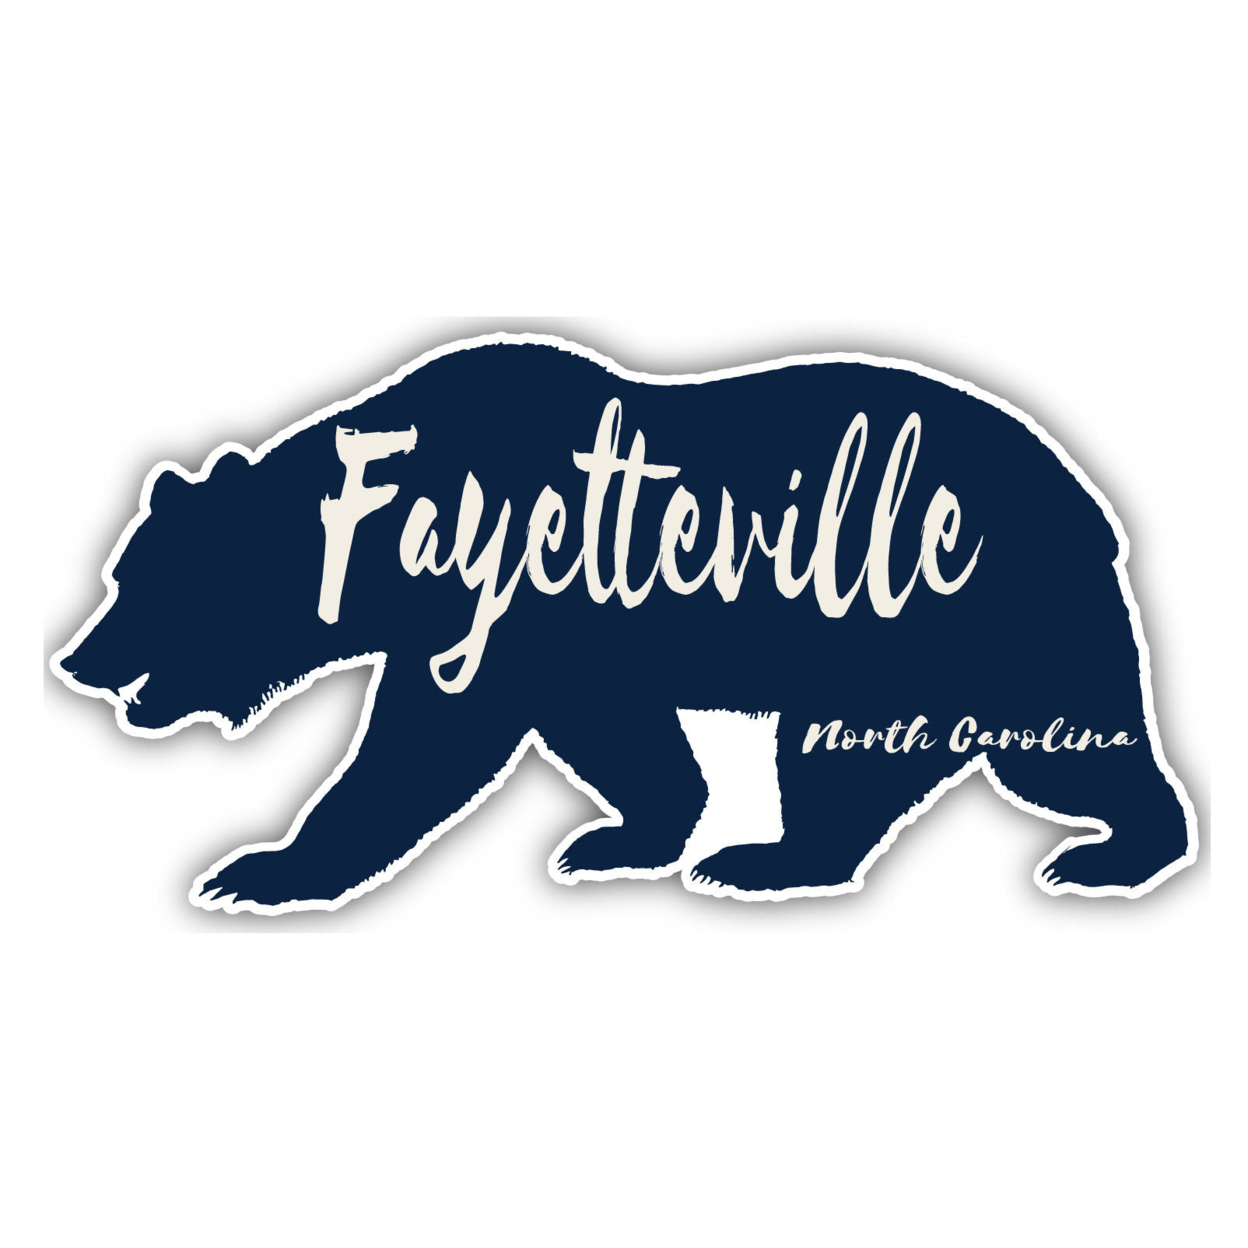 Fayetteville North Carolina Souvenir Decorative Stickers (Choose Theme And Size) - Single Unit, 6-Inch, Tent